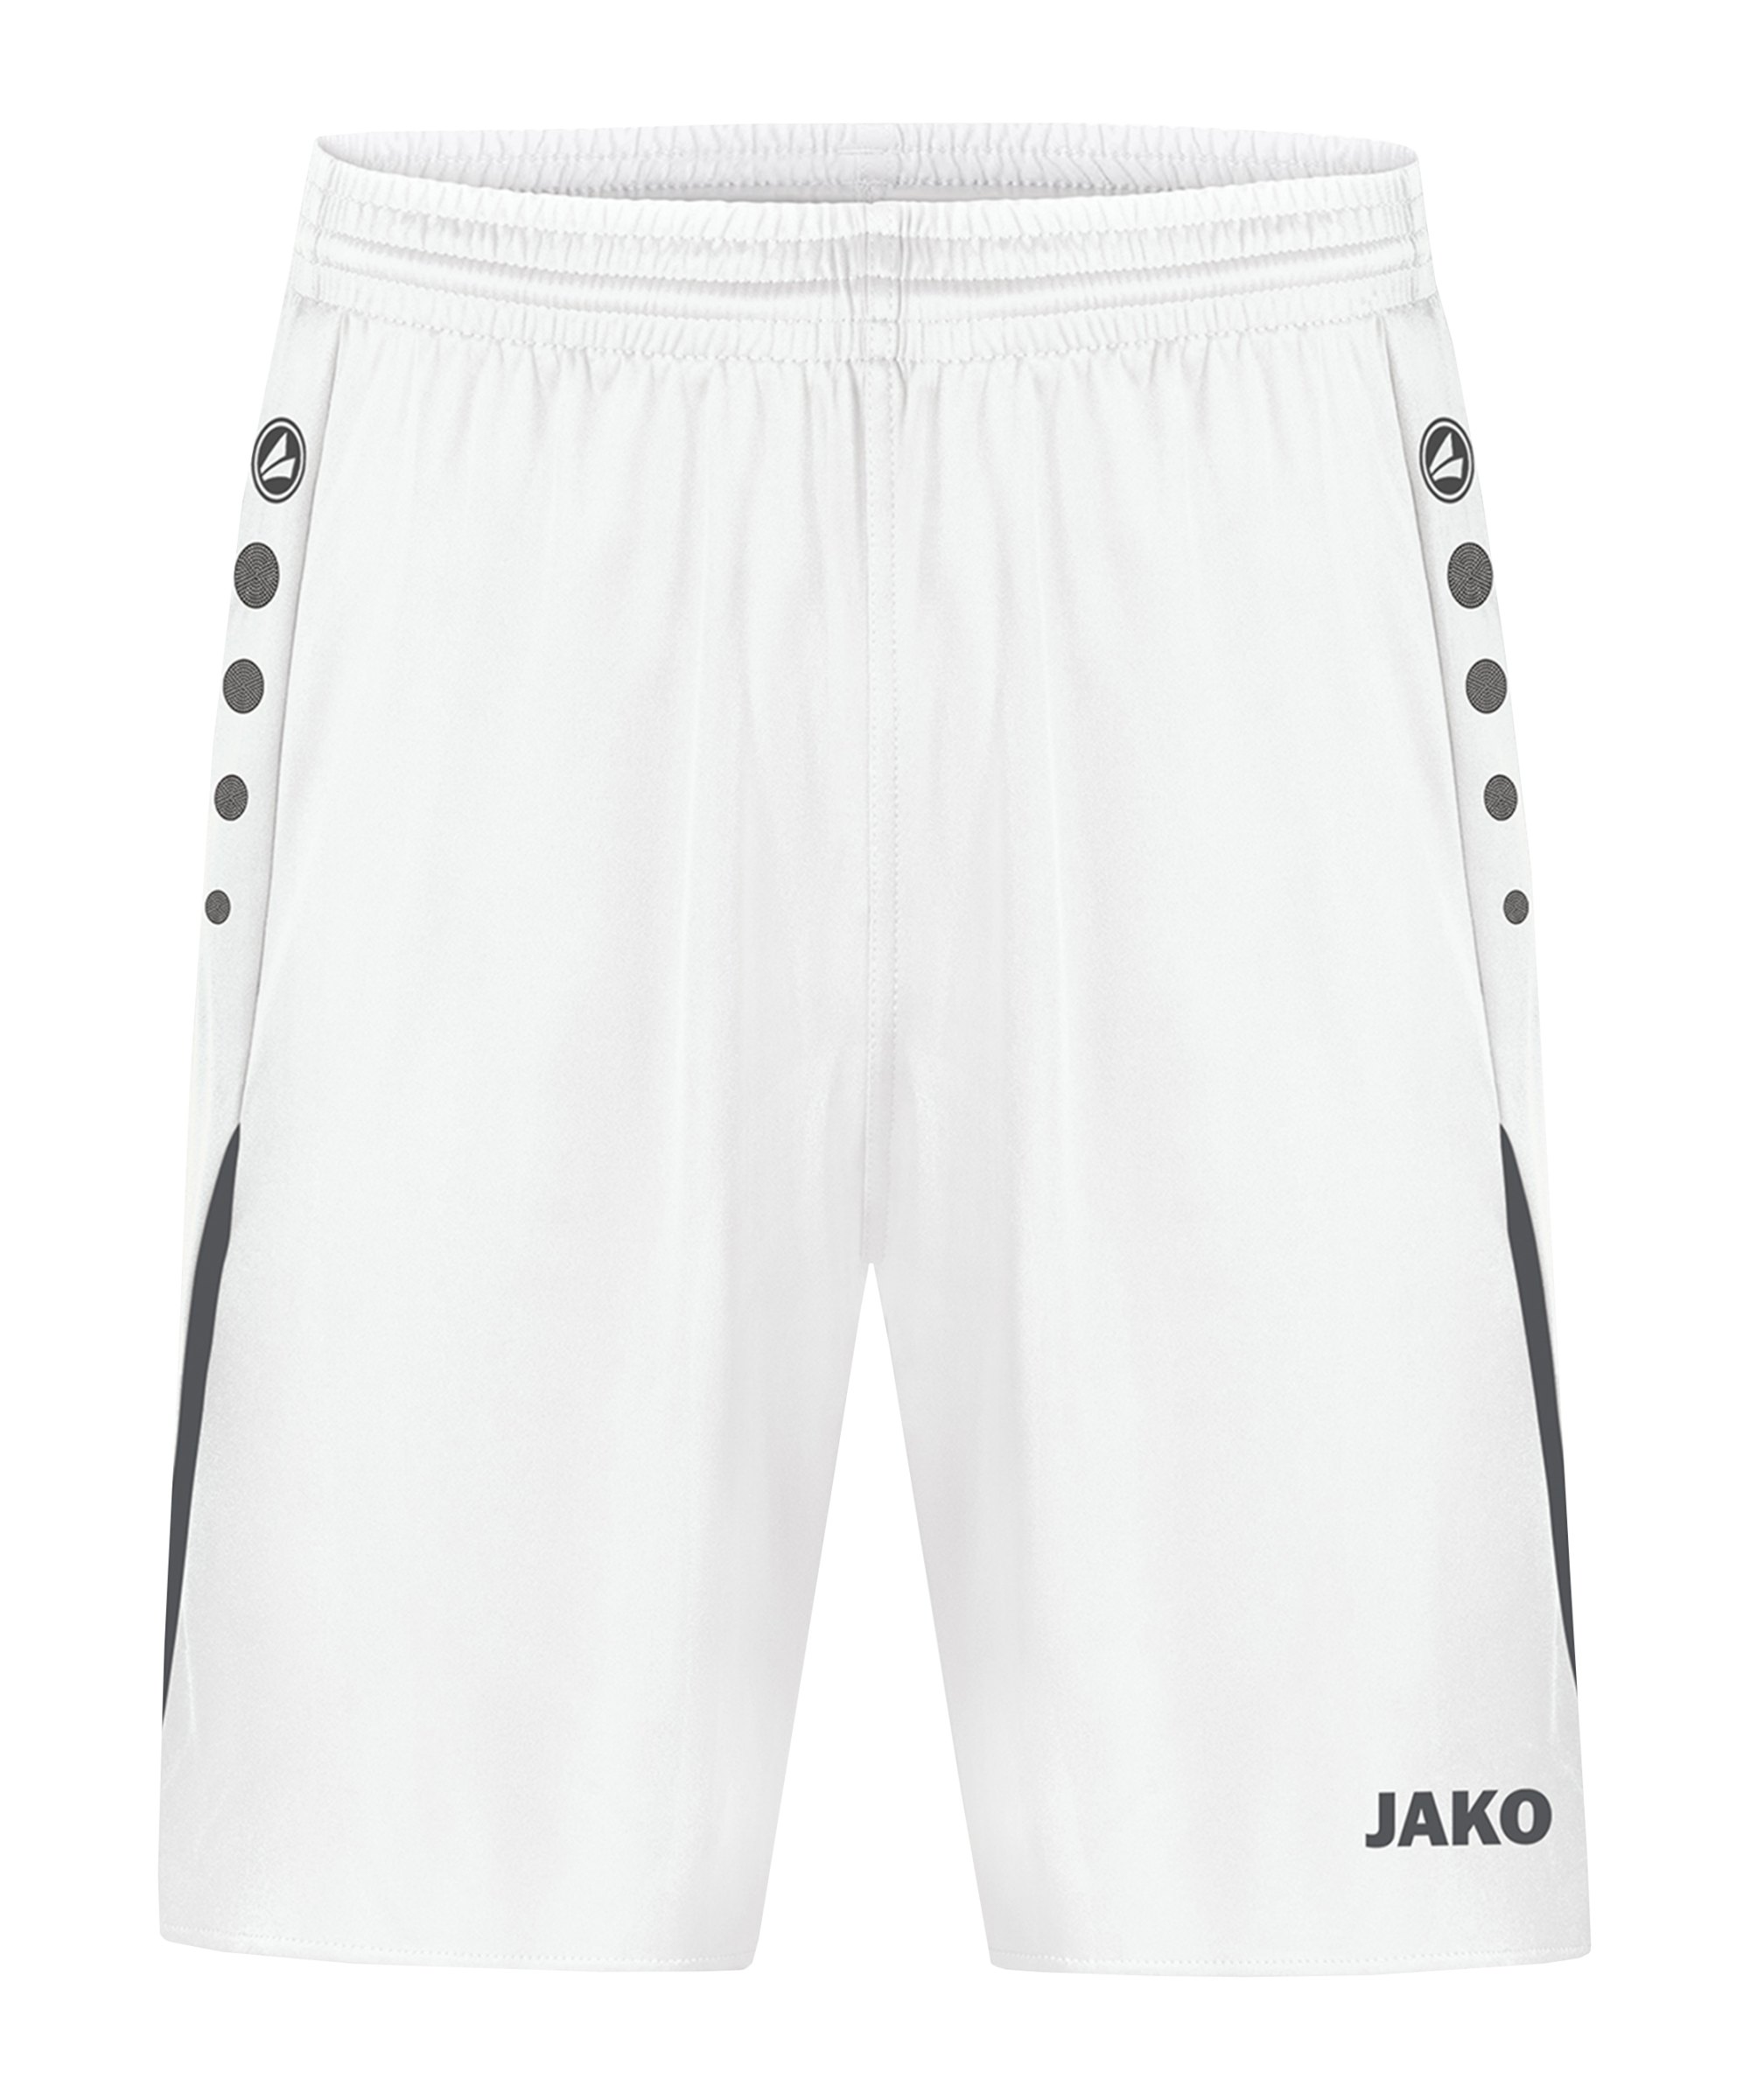 JAKO Challenge Short Weiss Grau F002 - weiss